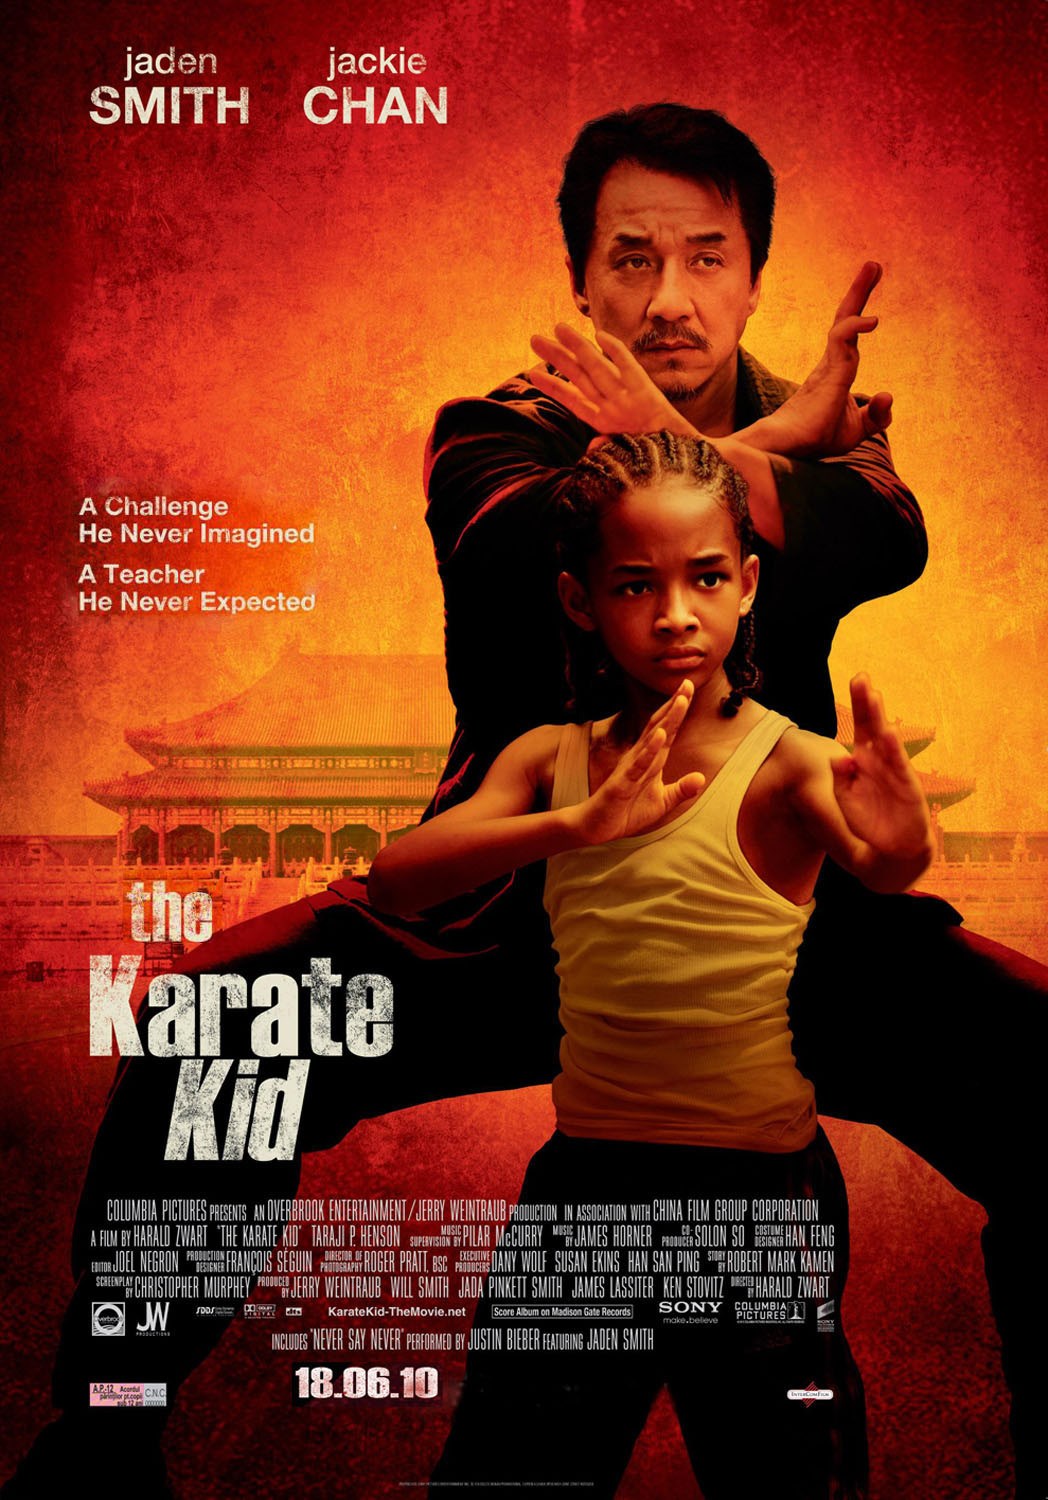 the karate kid 2010 movie torrent download